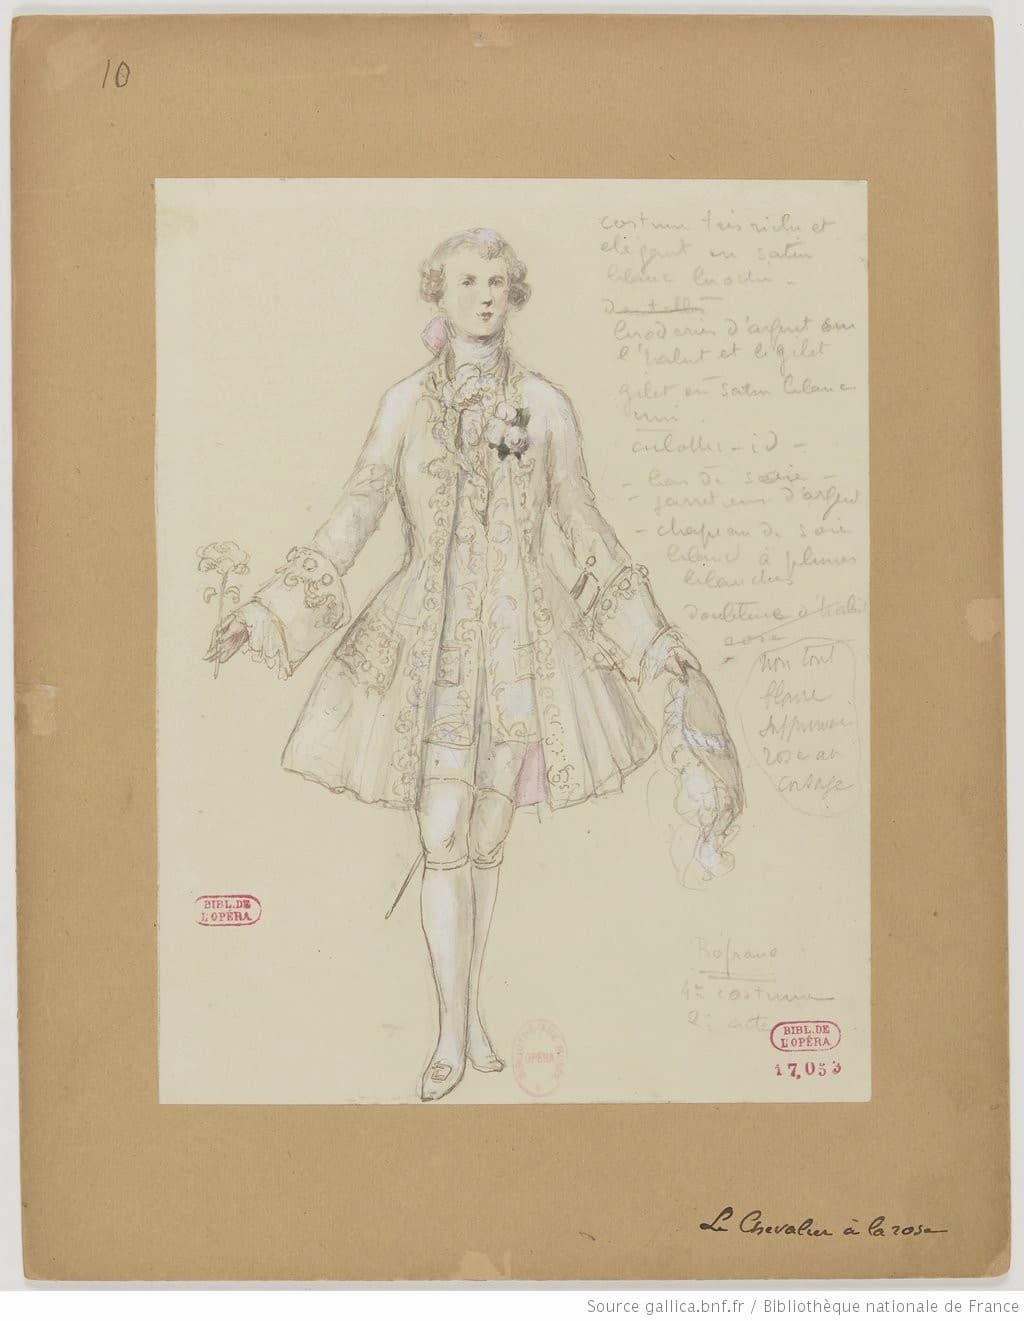 Drésa: Le chevalier à la rose, Octavian Count Rofrano, 2nd act, 4th costume, 1927 (Gallica ark:/12148/btv1b105242553)